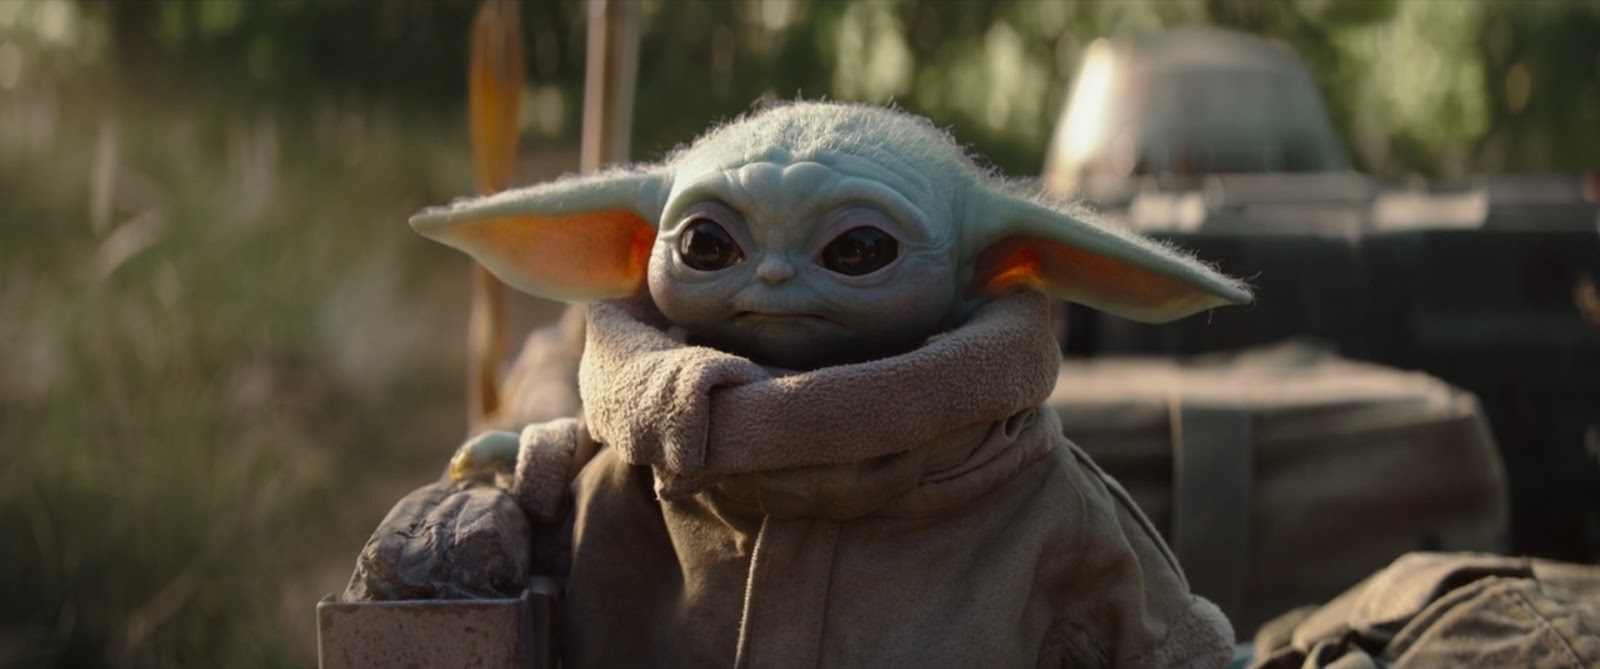 The Baby Yoda in The Mandalorian Season One